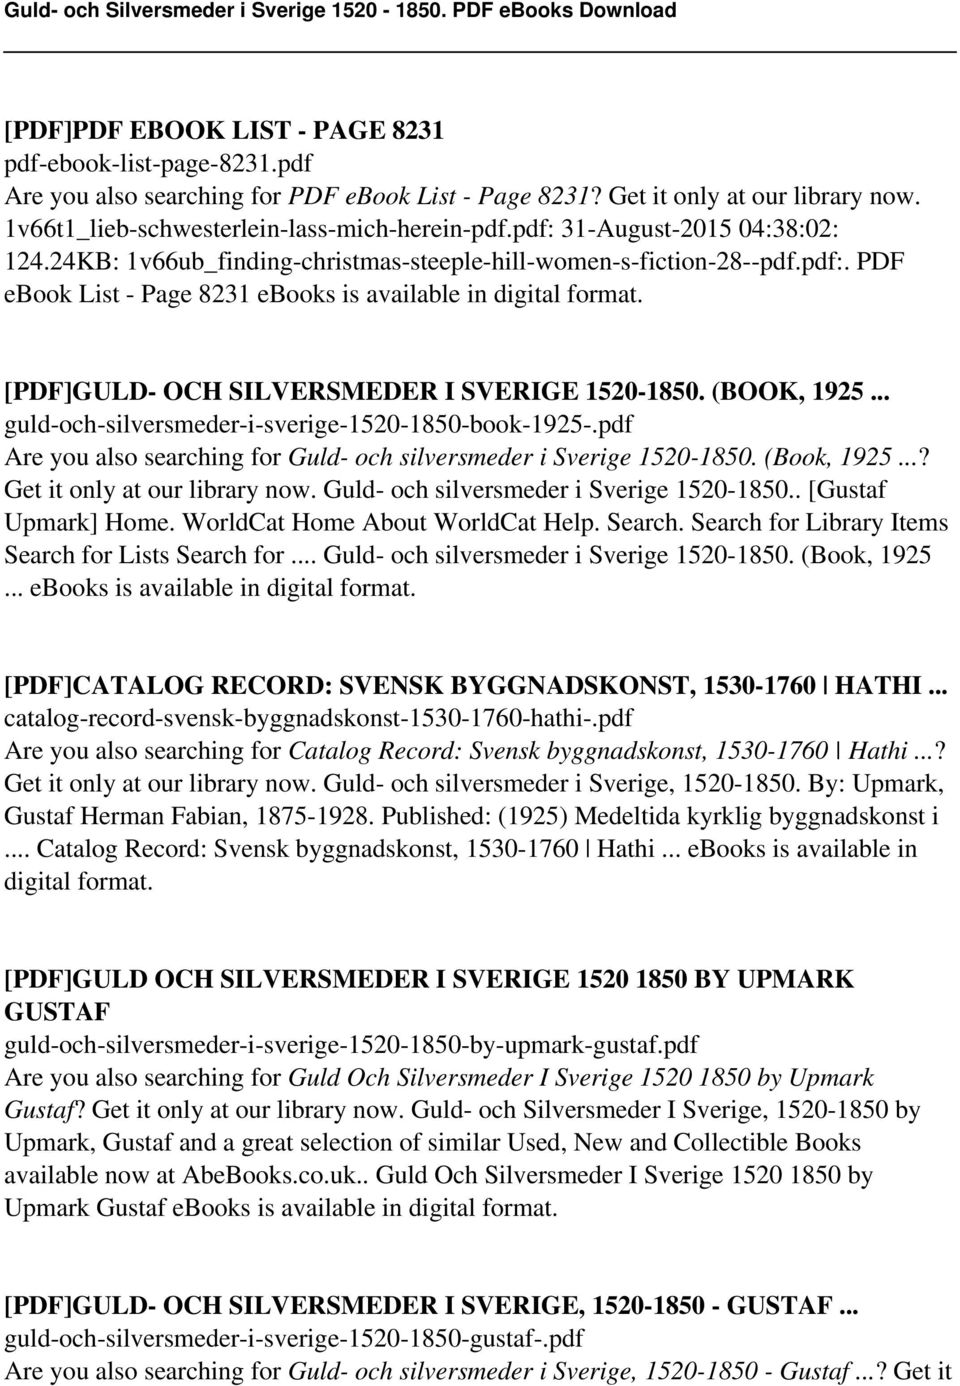 (BOOK, 1925... guld-och-silversmeder-i-sverige-1520-1850-book-1925-.pdf Are you also searching for Guld- och silversmeder i Sverige 1520-1850. (Book, 1925...? Get it only at our library now.